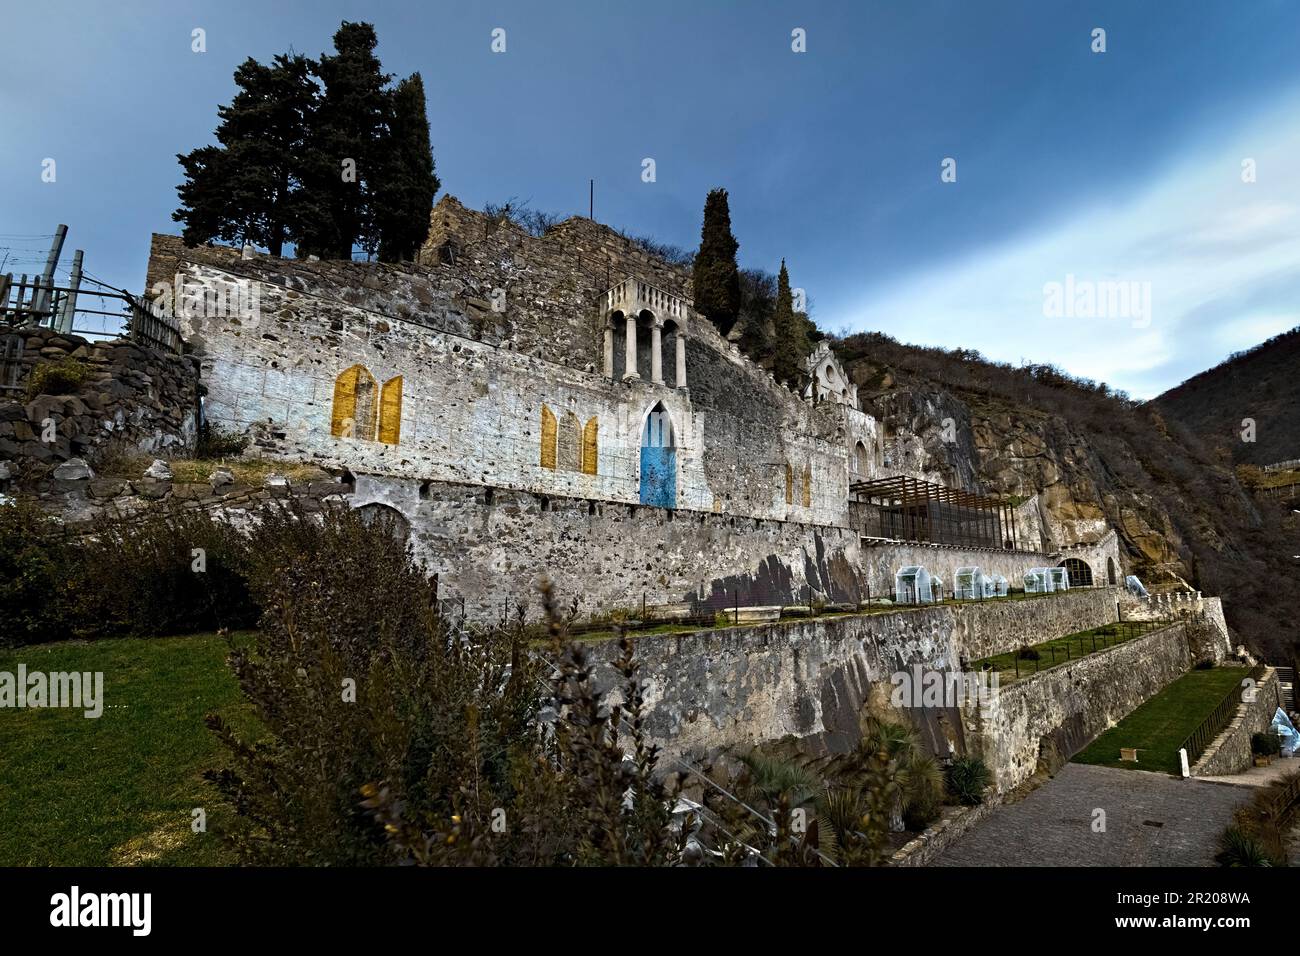 The Ciucioi garden is a 19th century monumental garden built in Gothic and Arabesque style. Lavis, Trentino, Italy. Stock Photo